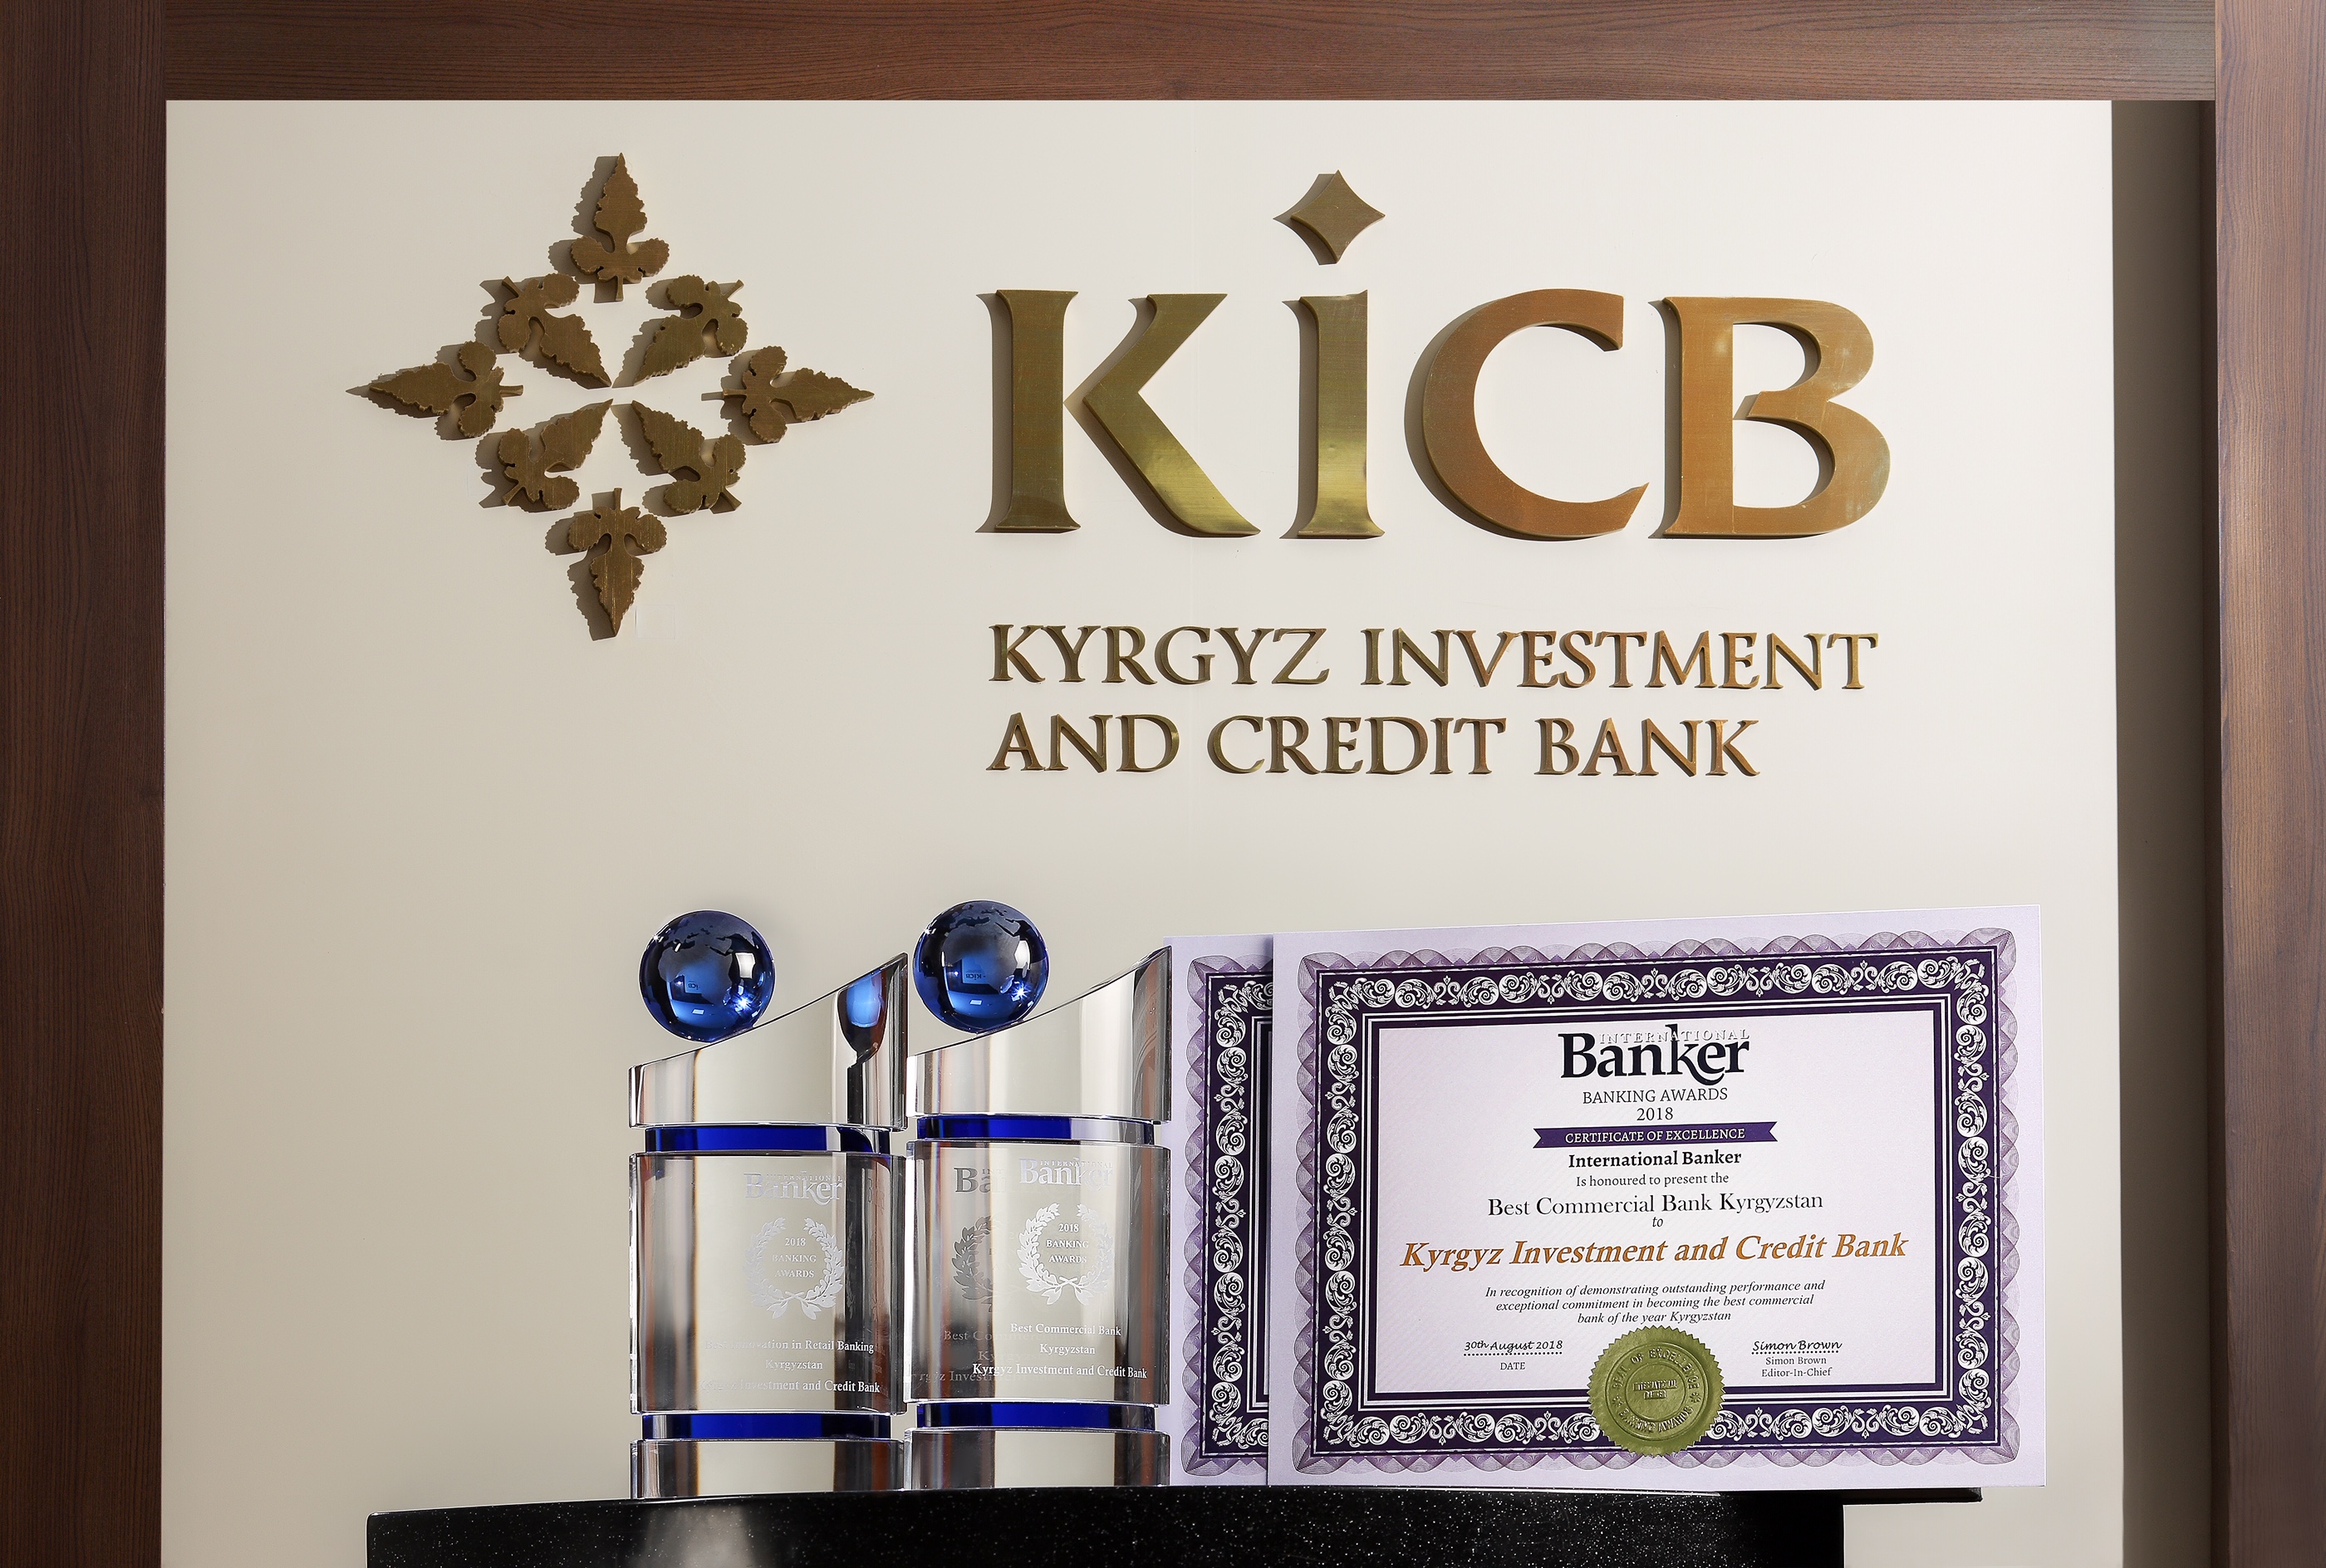 Kicb банк кыргызстан. Кыргызский инвестиционно-кредитный банк (KICB). KICB логотип. Банки Киргизии KICB.